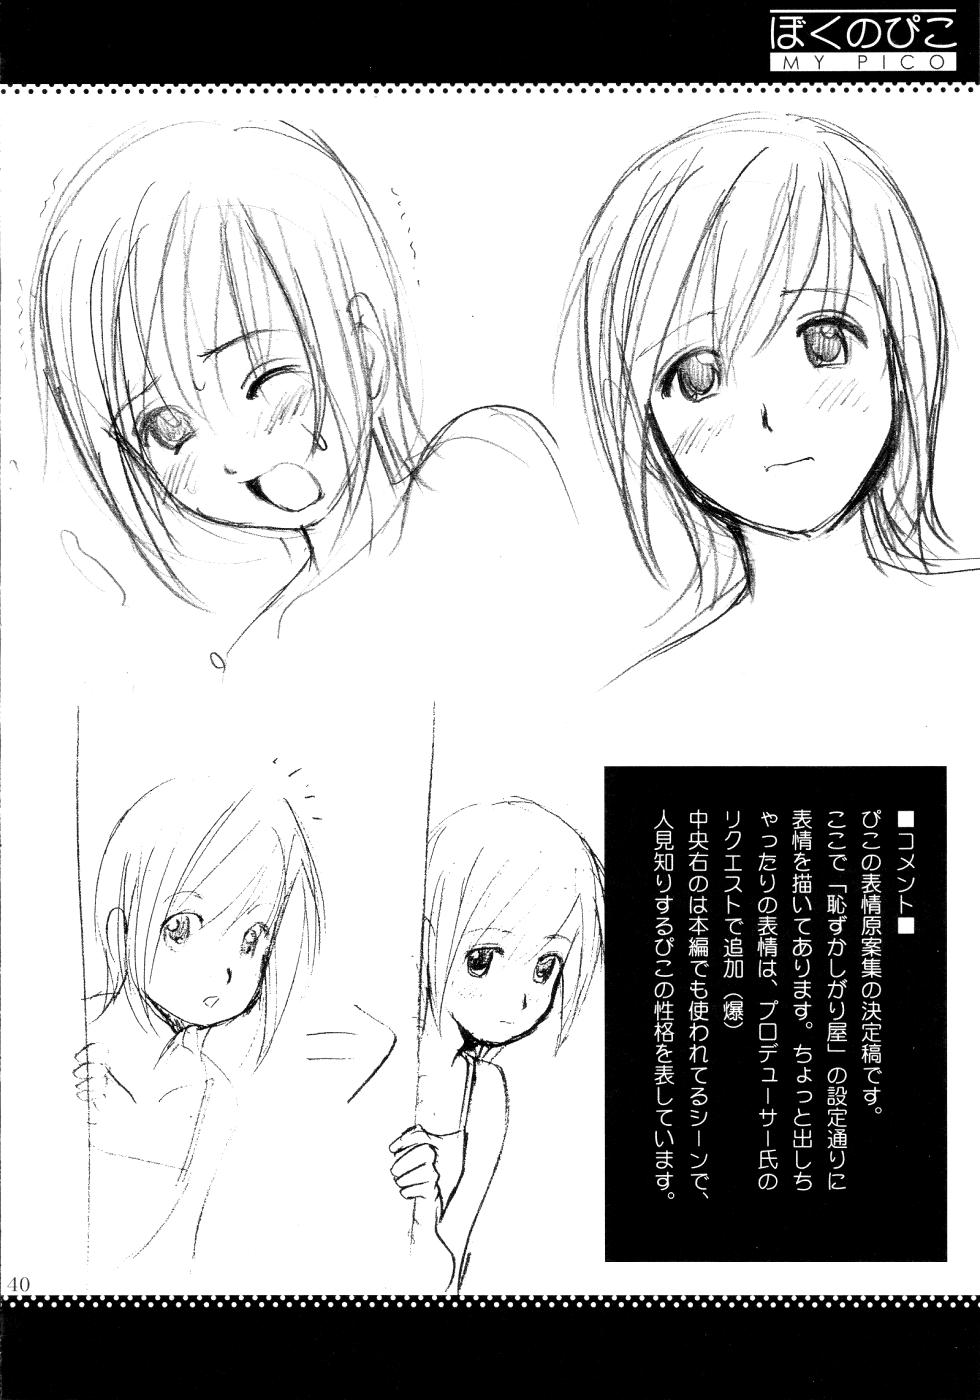 Boku no Pico Comic + Koushiki Character Genanshuu 39